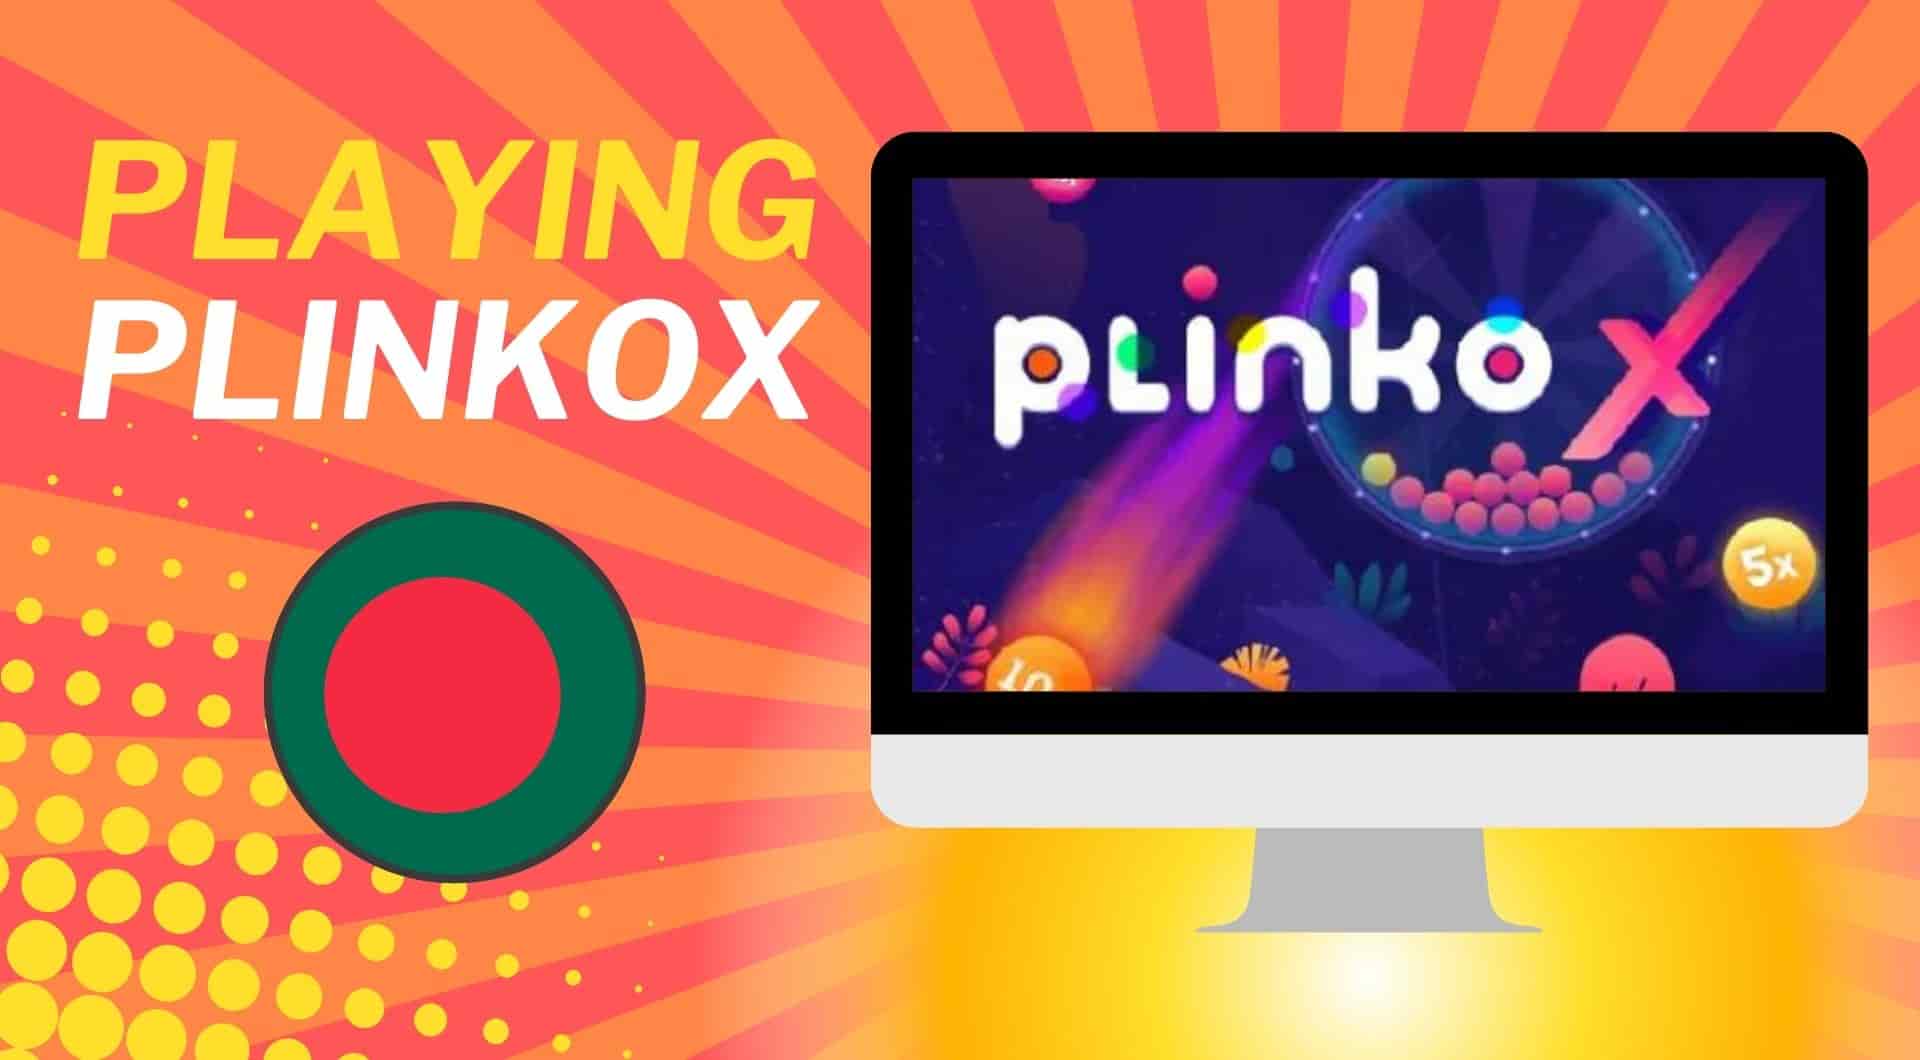 How to play PlinkoX game at Bhaggo casino